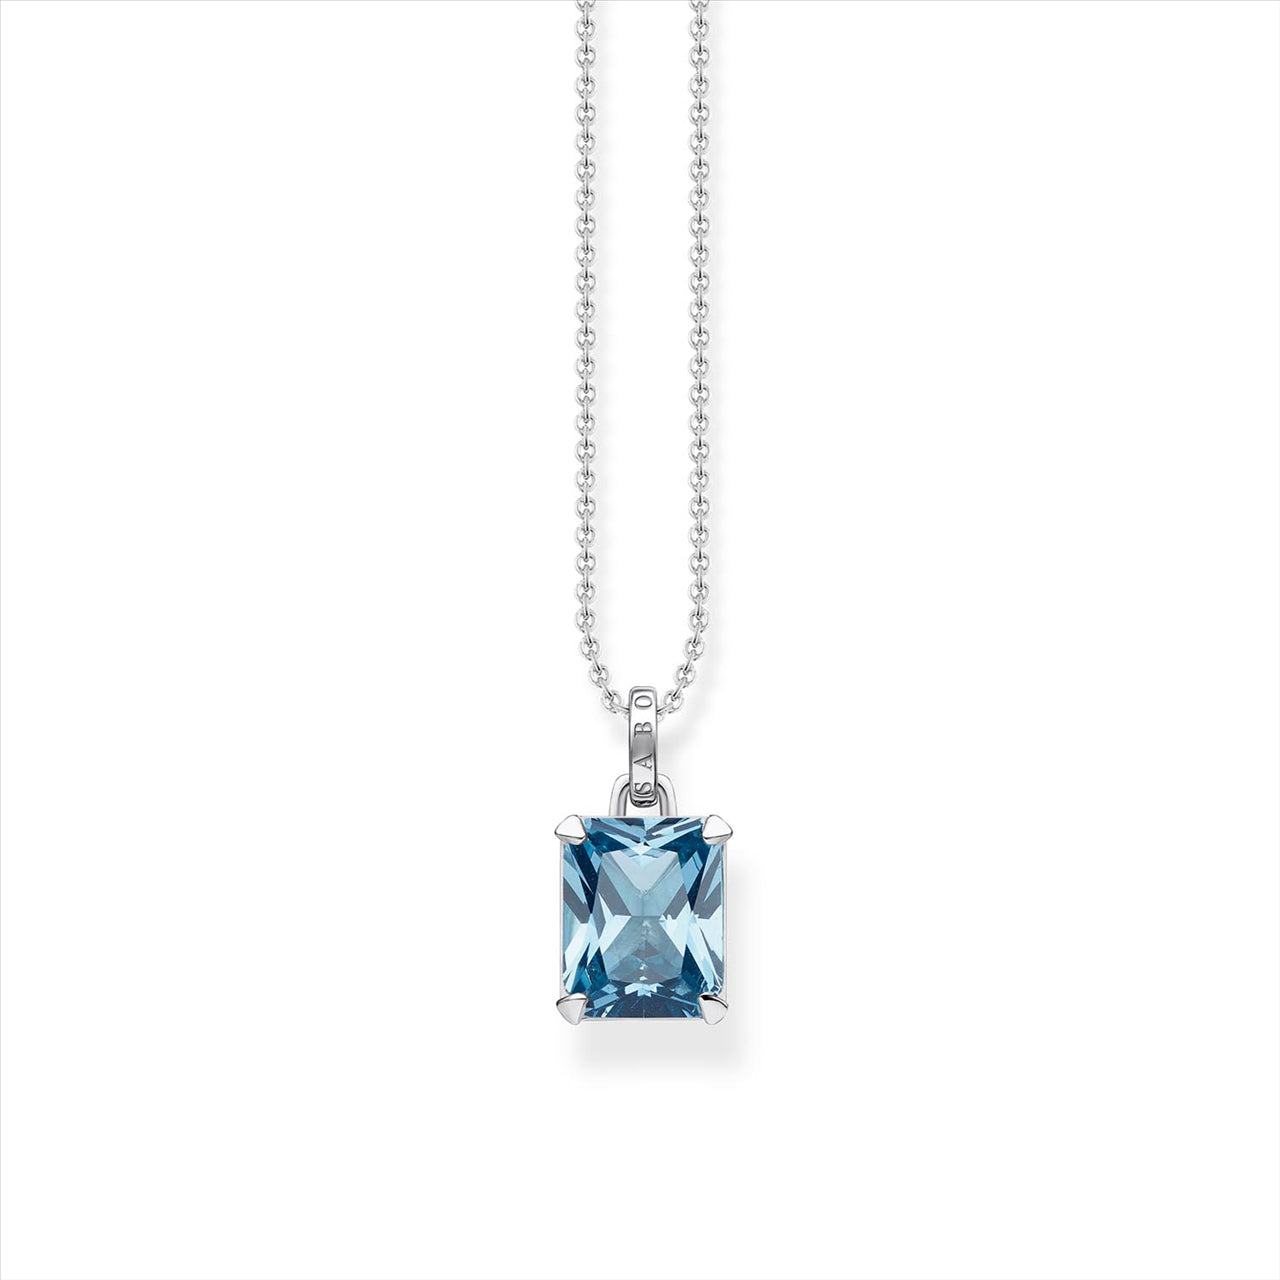 Thomas Sabo Blue Stone Small Necklace 45-50cm